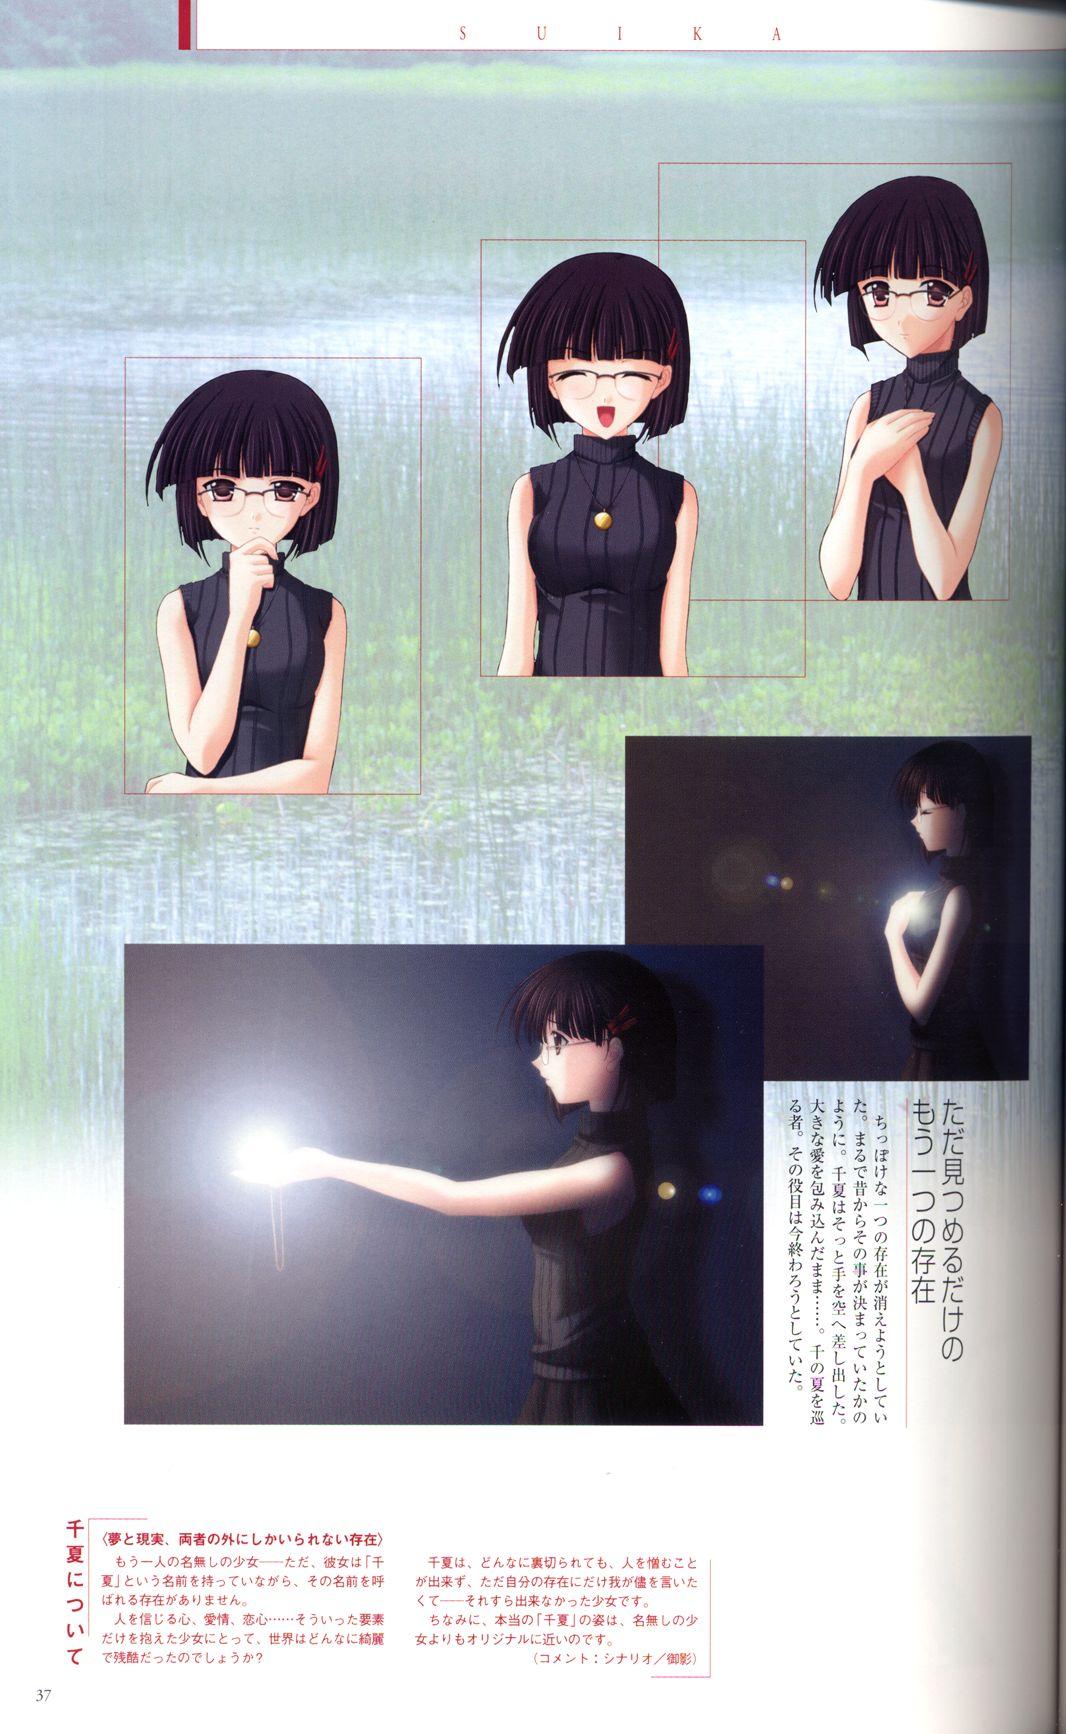 SUIKA Official Visual Fan Book 45